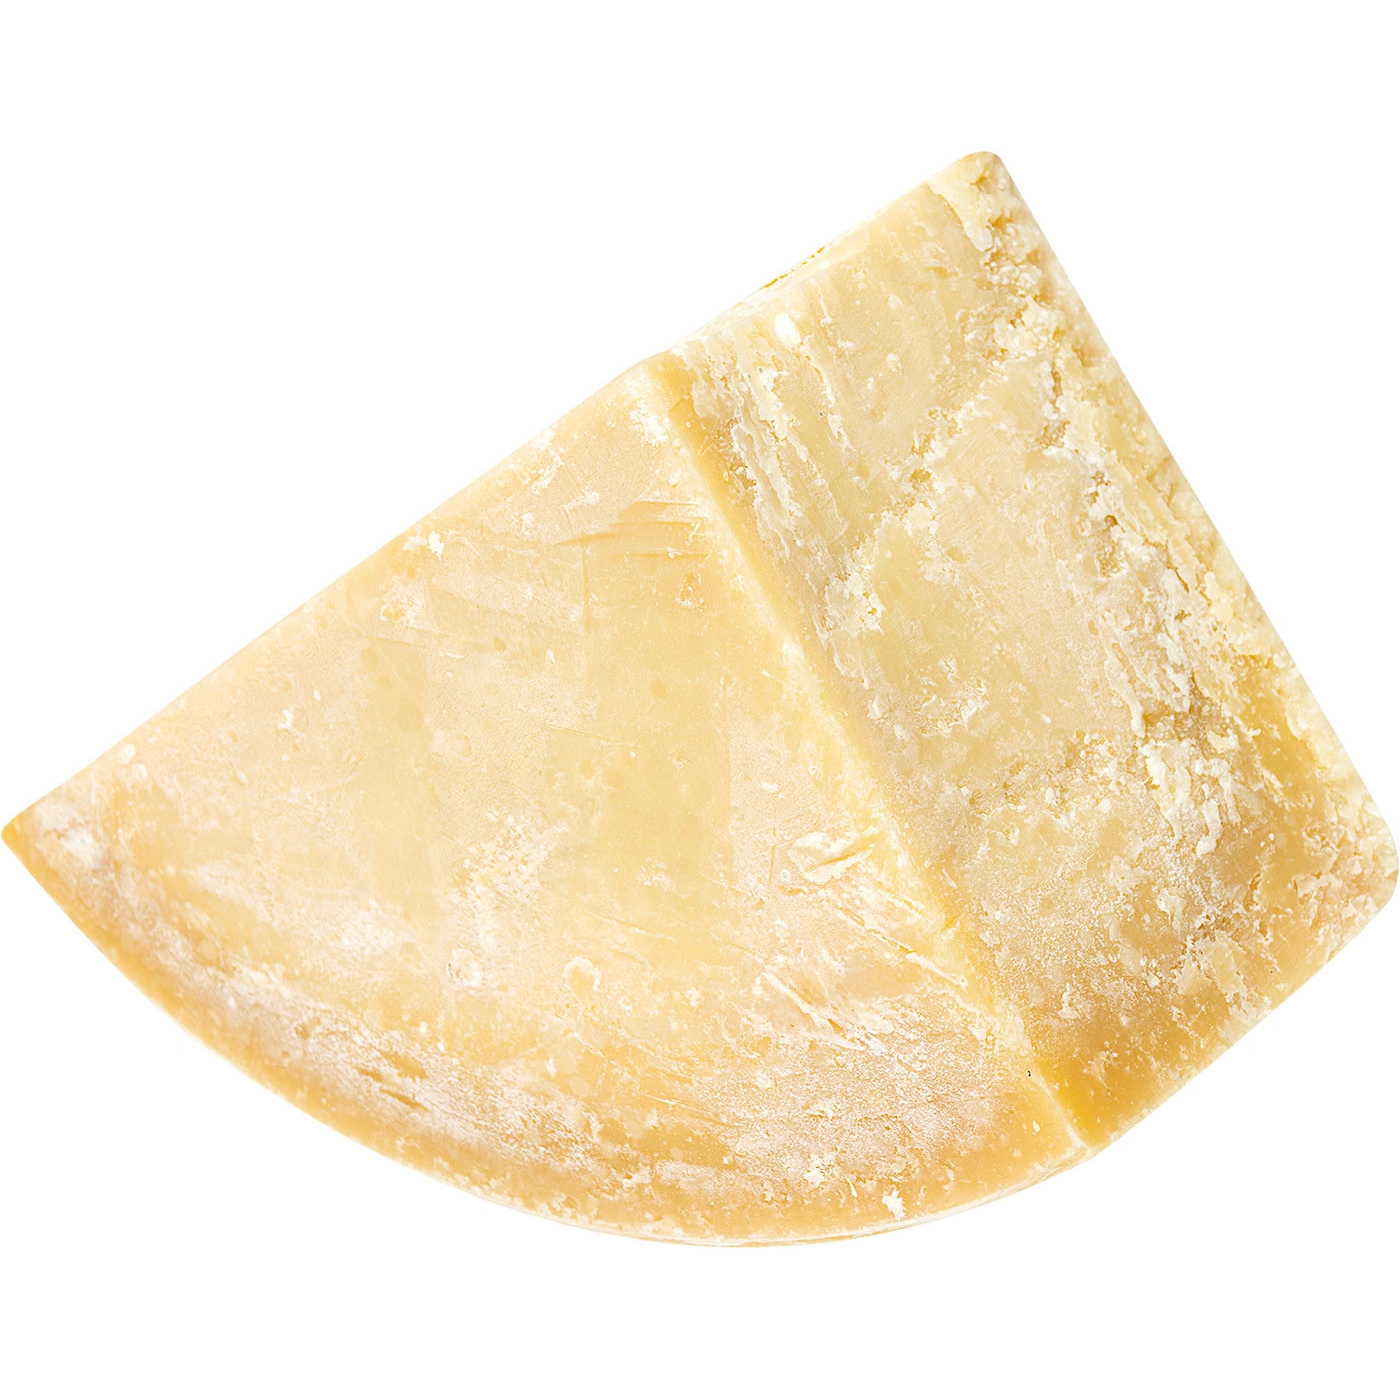 Сыр Пармезан Margot Fromages швейцарский твердый 40%, кг